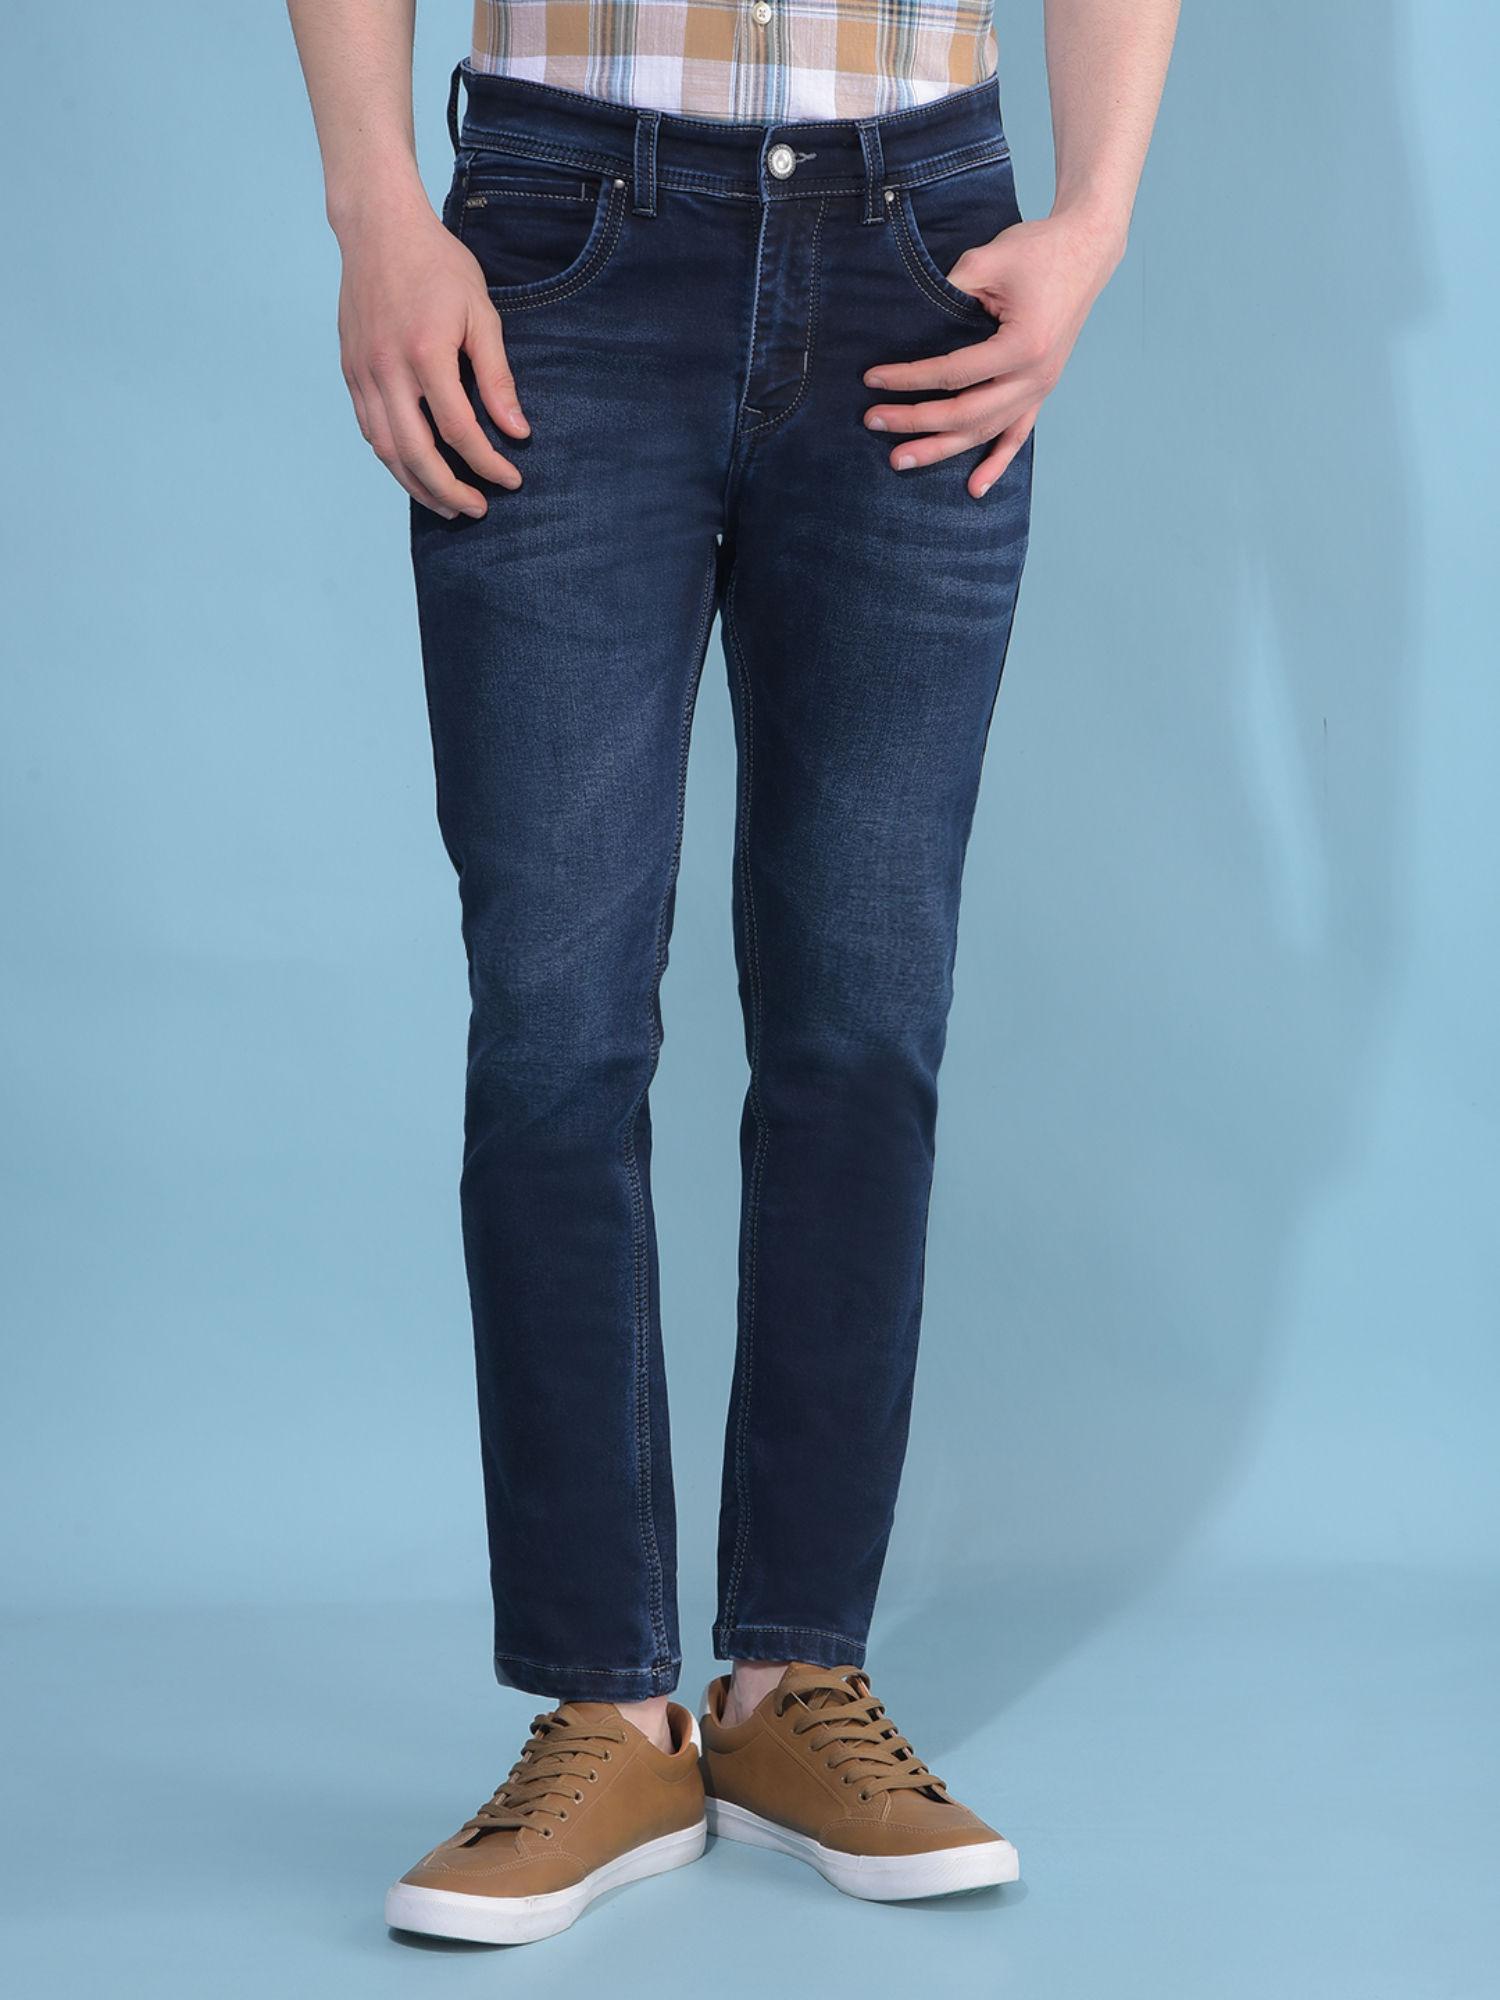 mens-navy-blue-skinny-stretchable-jeans